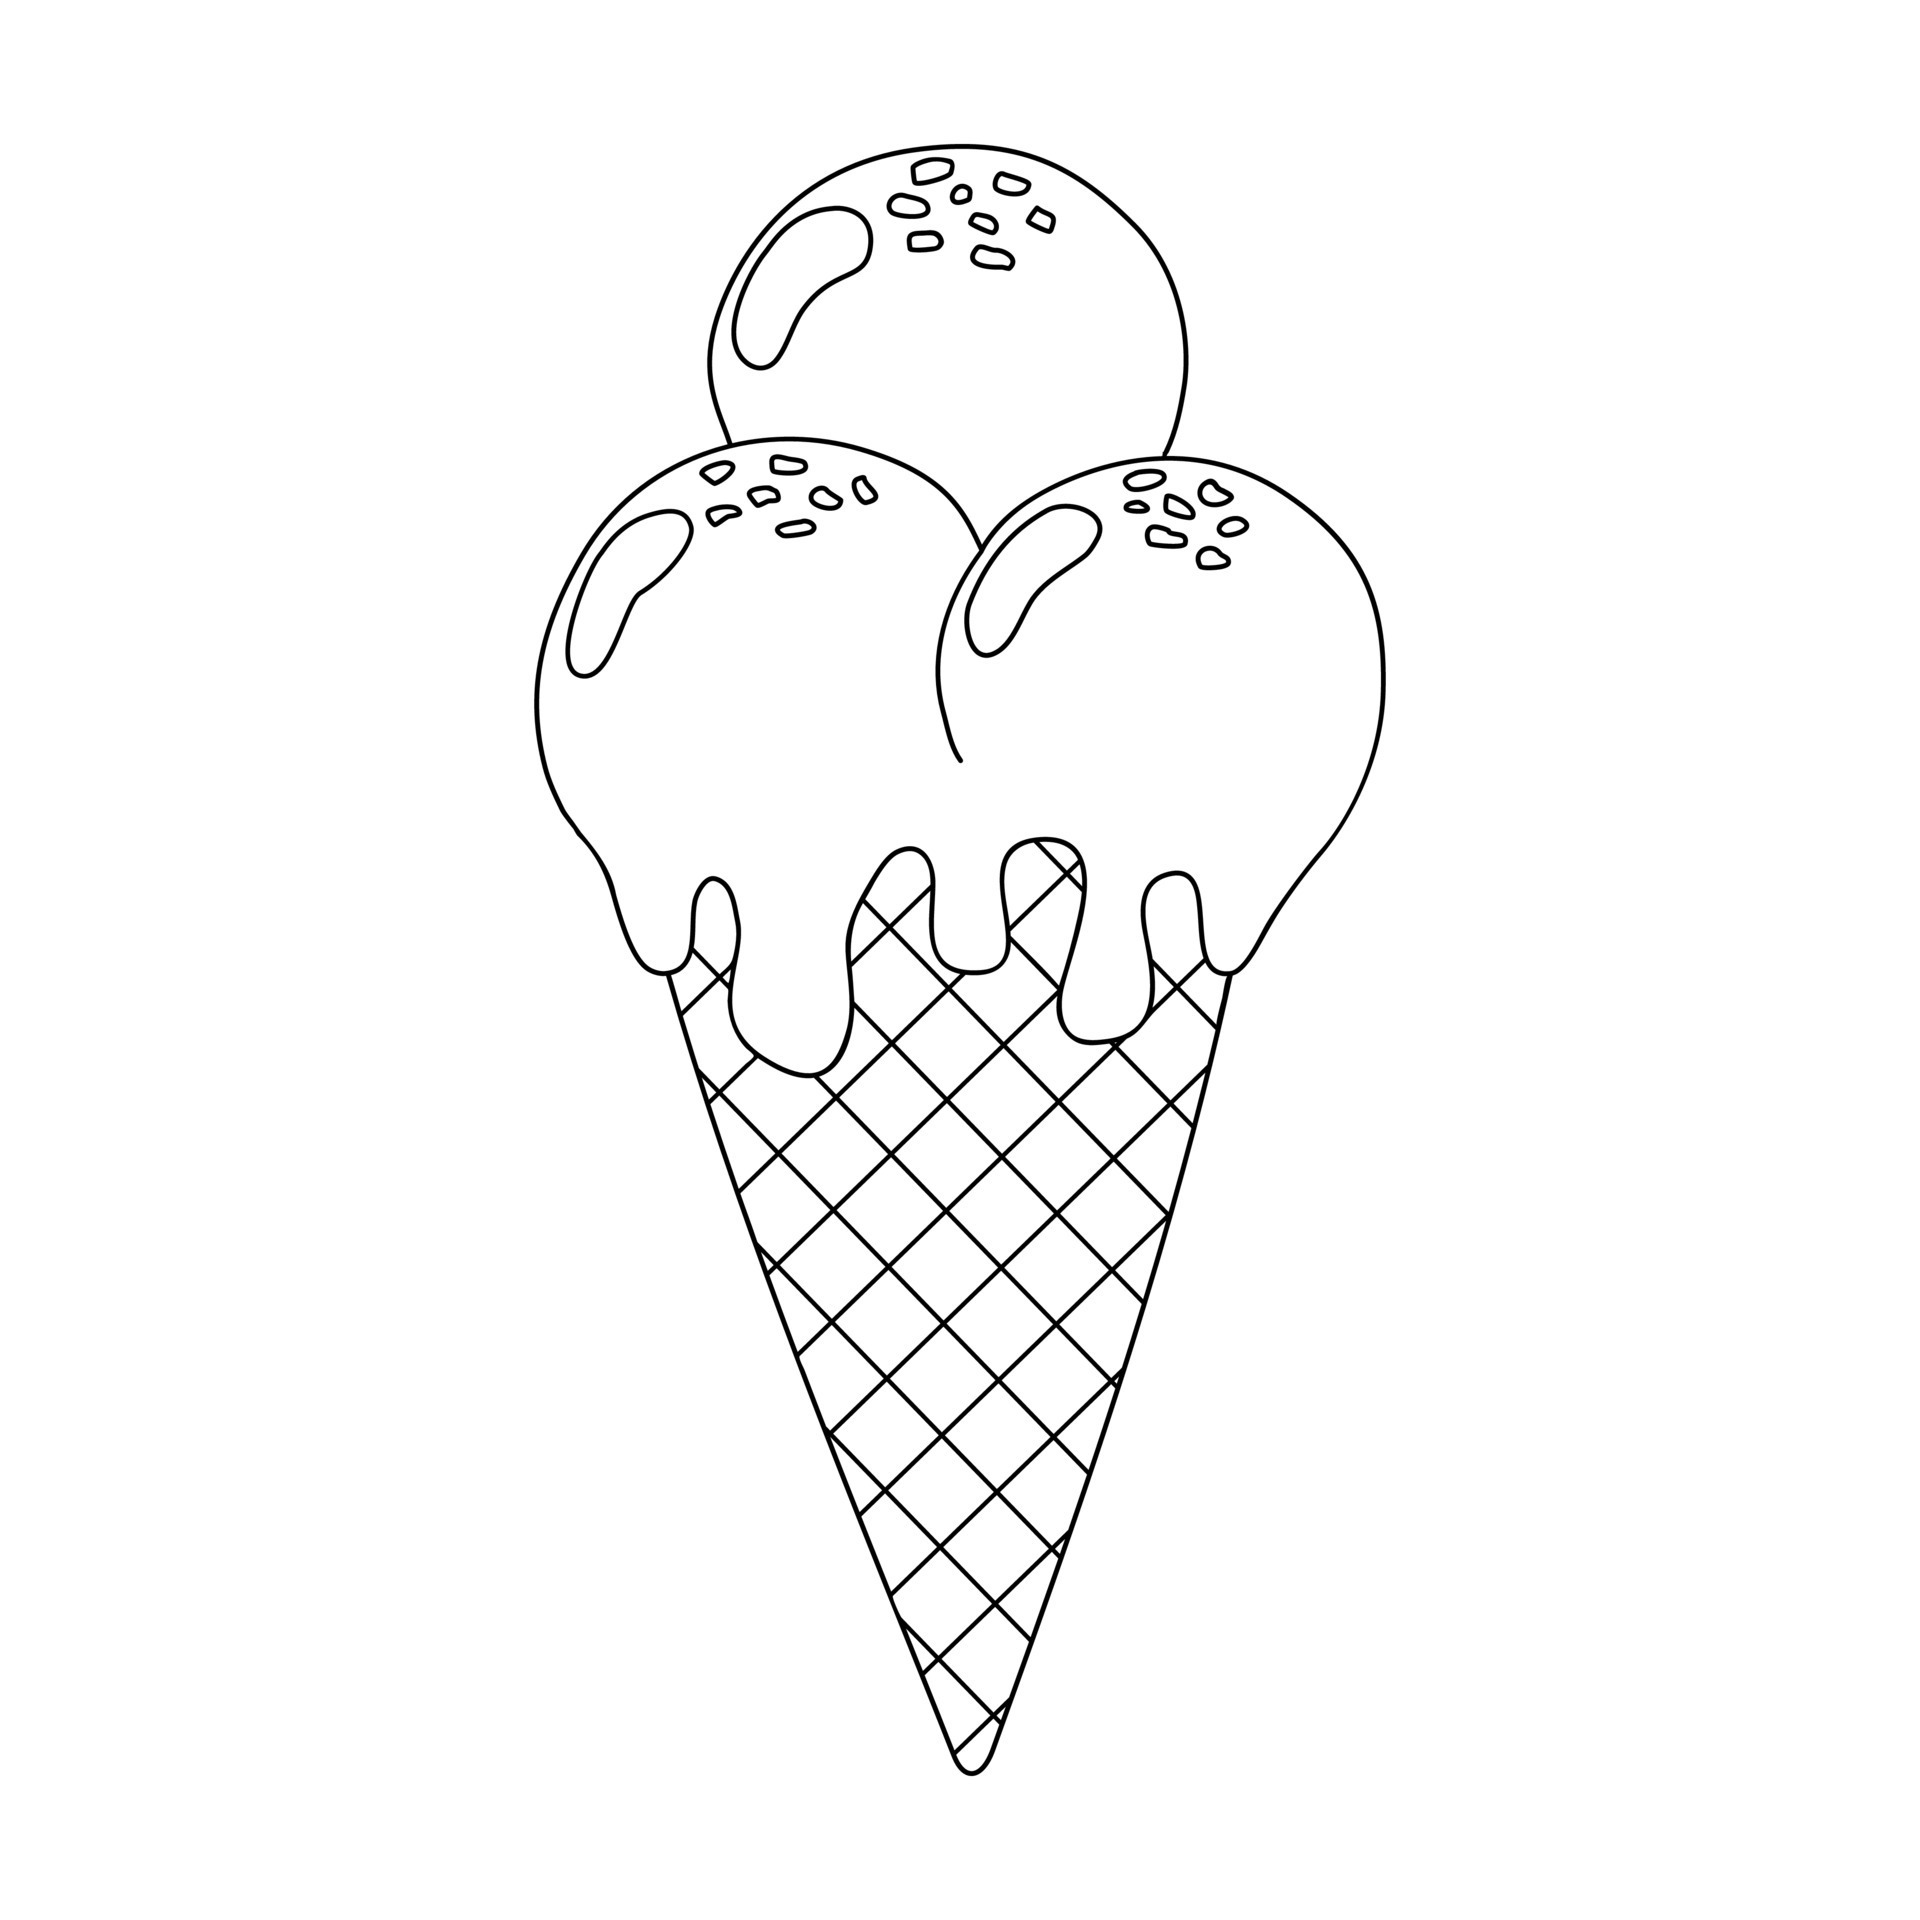 3 Scoop Ice Cream Cone Outline Svg, Ice Cream Svg, Ice Cream Cone Svg, Ice  Cream Vector, Cute Ice Cream Svg, Waffle Cone Svg